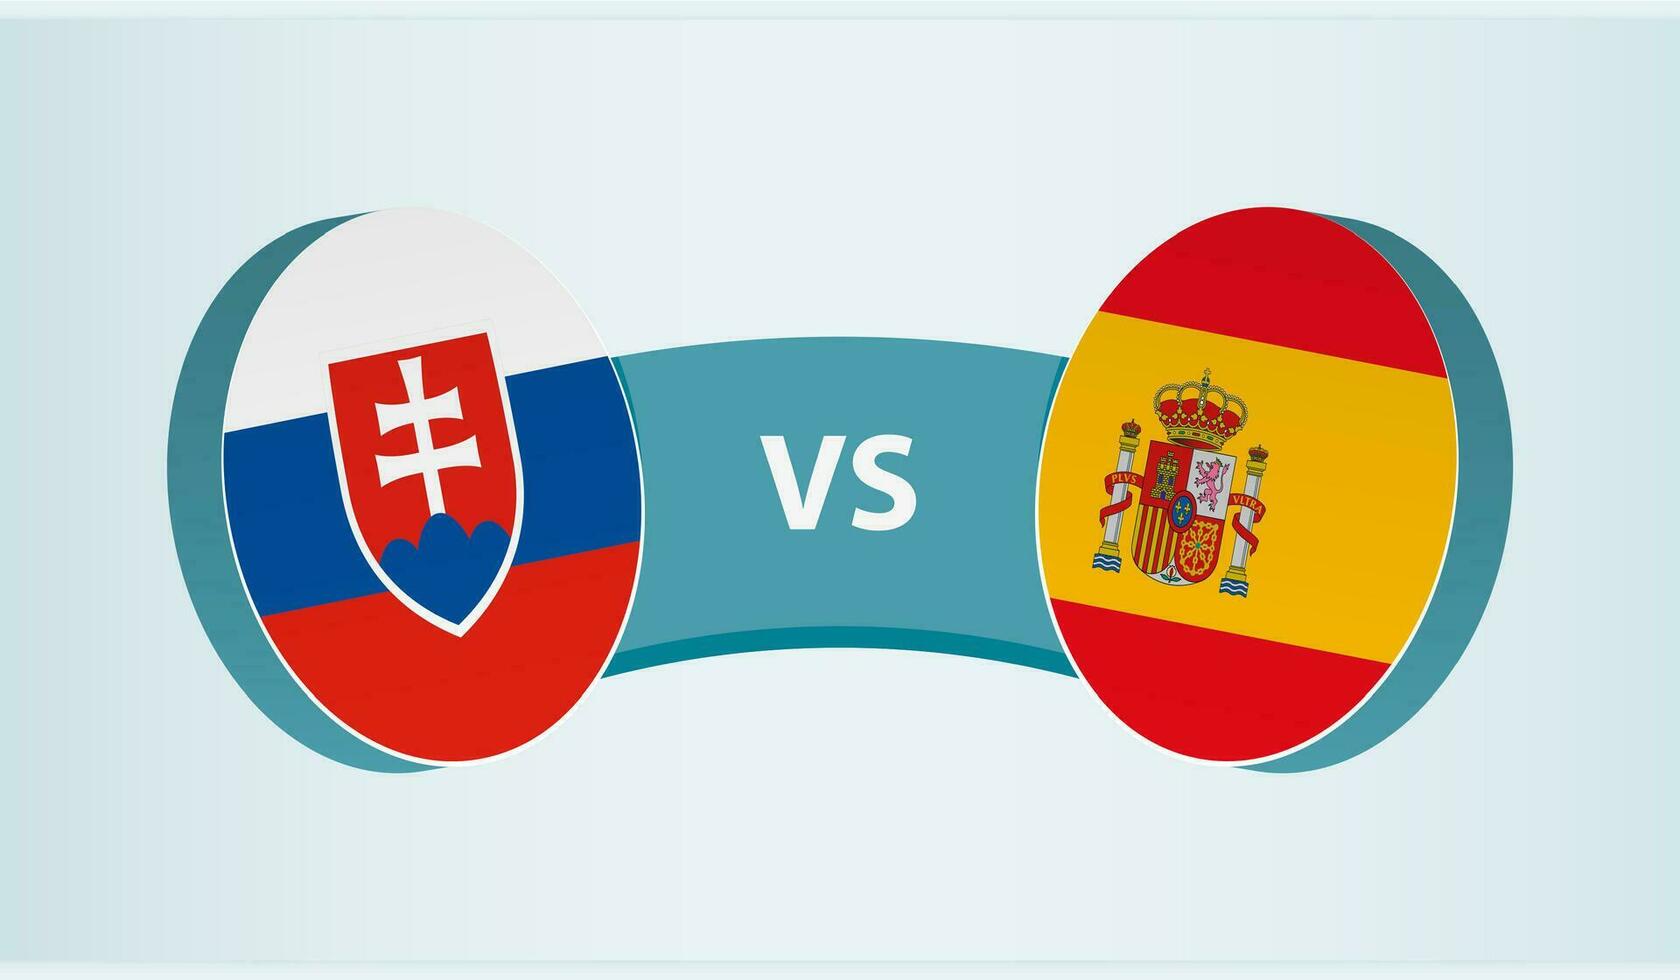 slovakia mot spanien, team sporter konkurrens begrepp. vektor